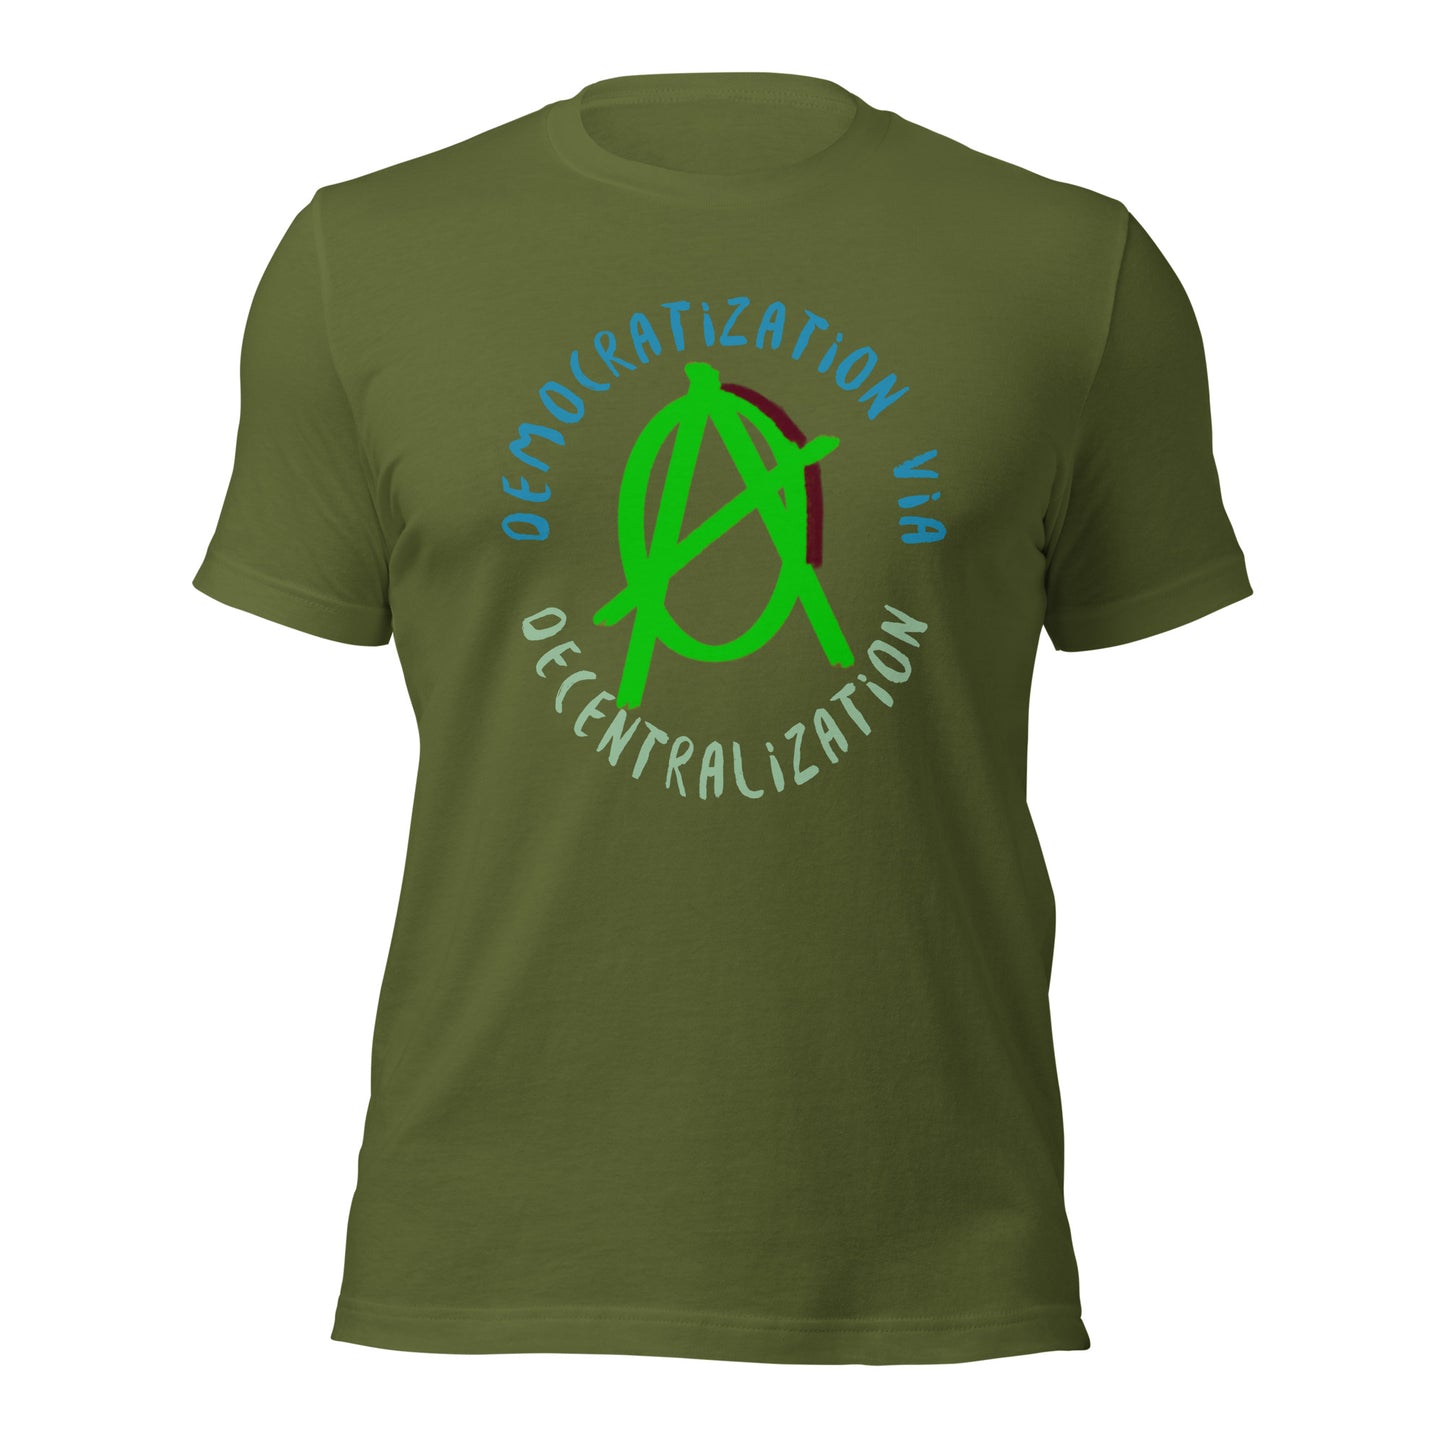 Anarchy Wear Green "Democratization Via Decentralization" Unisex t-shirt